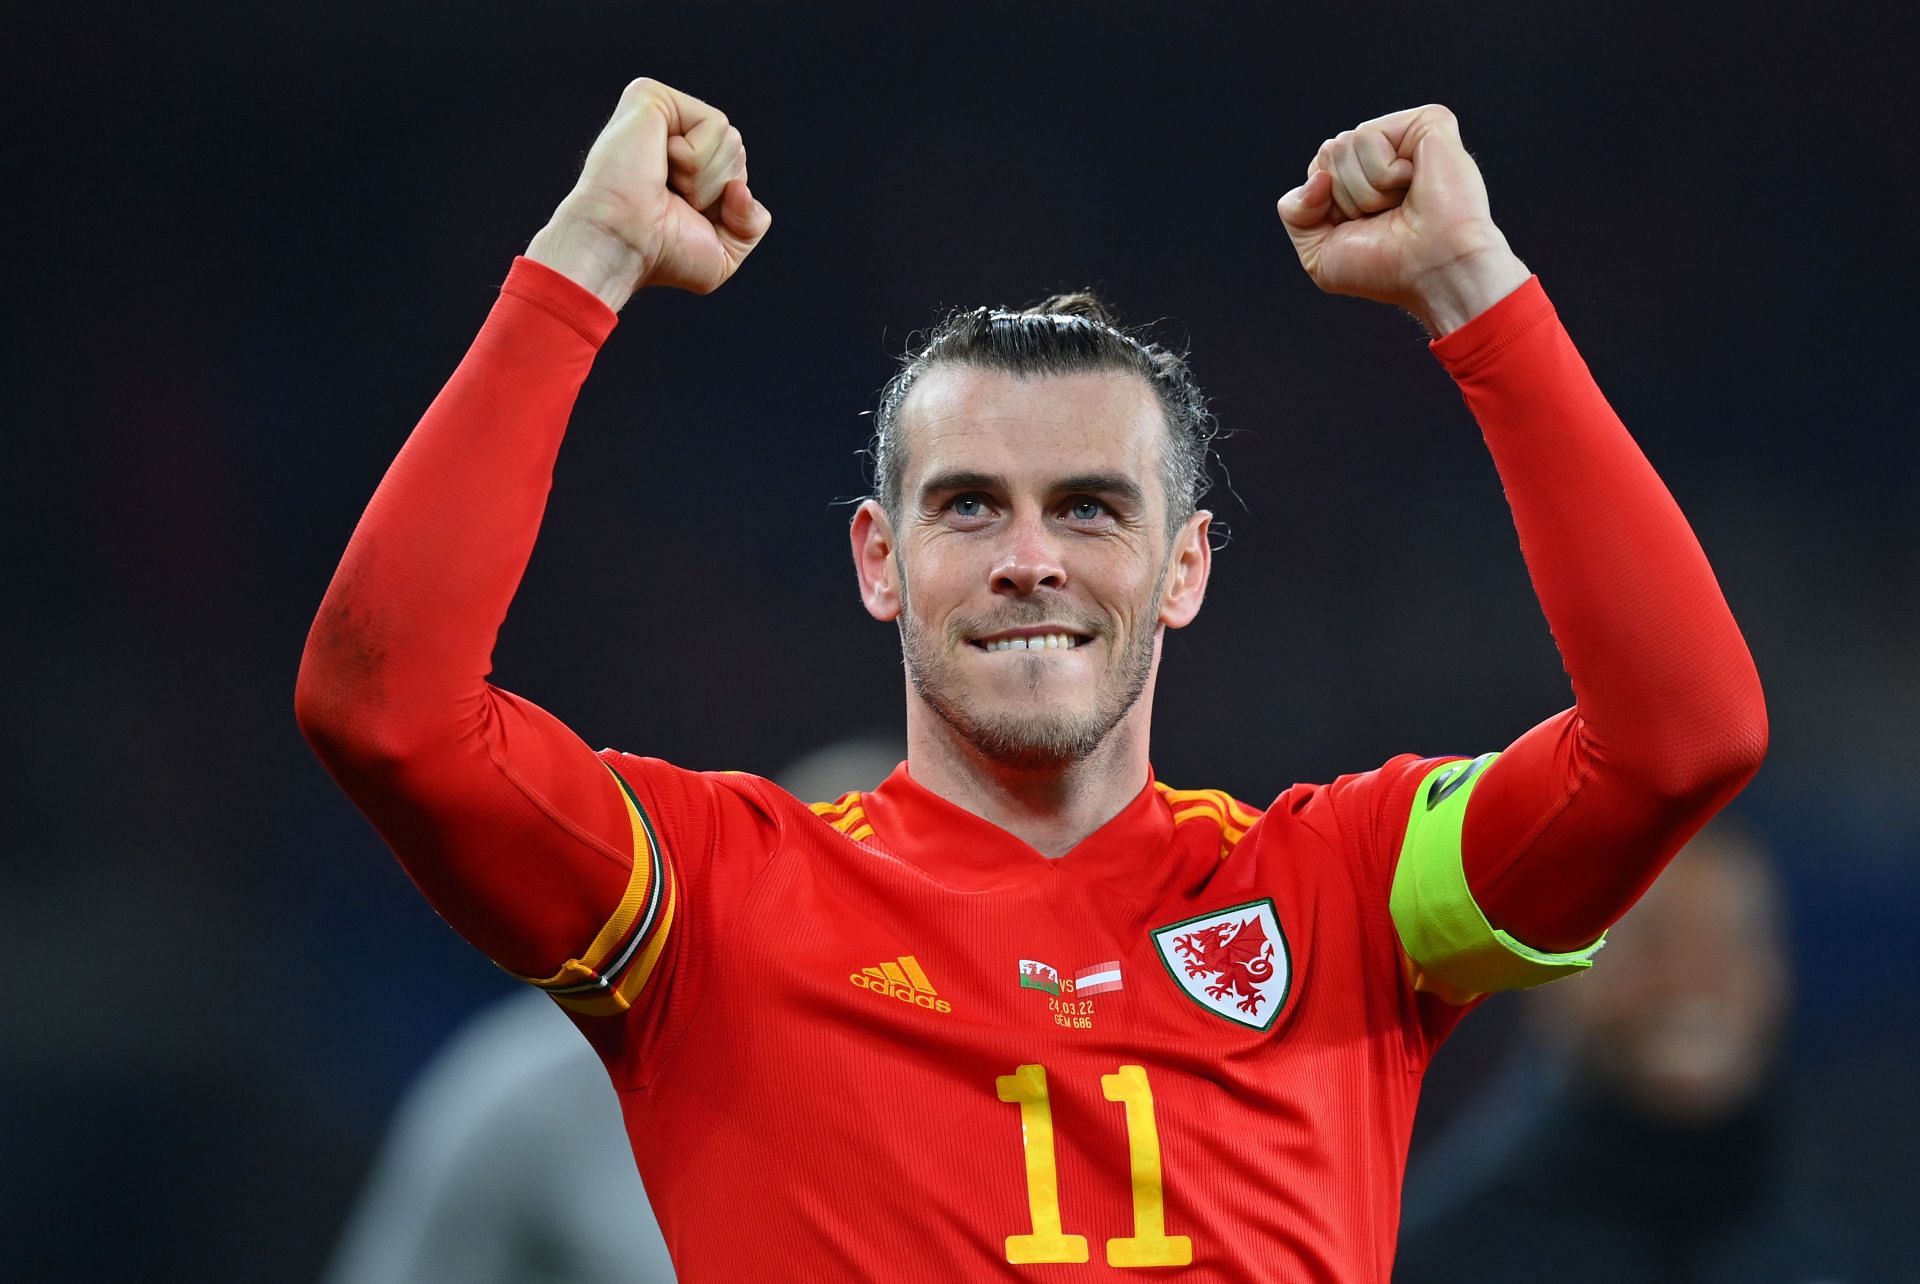 Gareth Bale carved out a memorable international career.